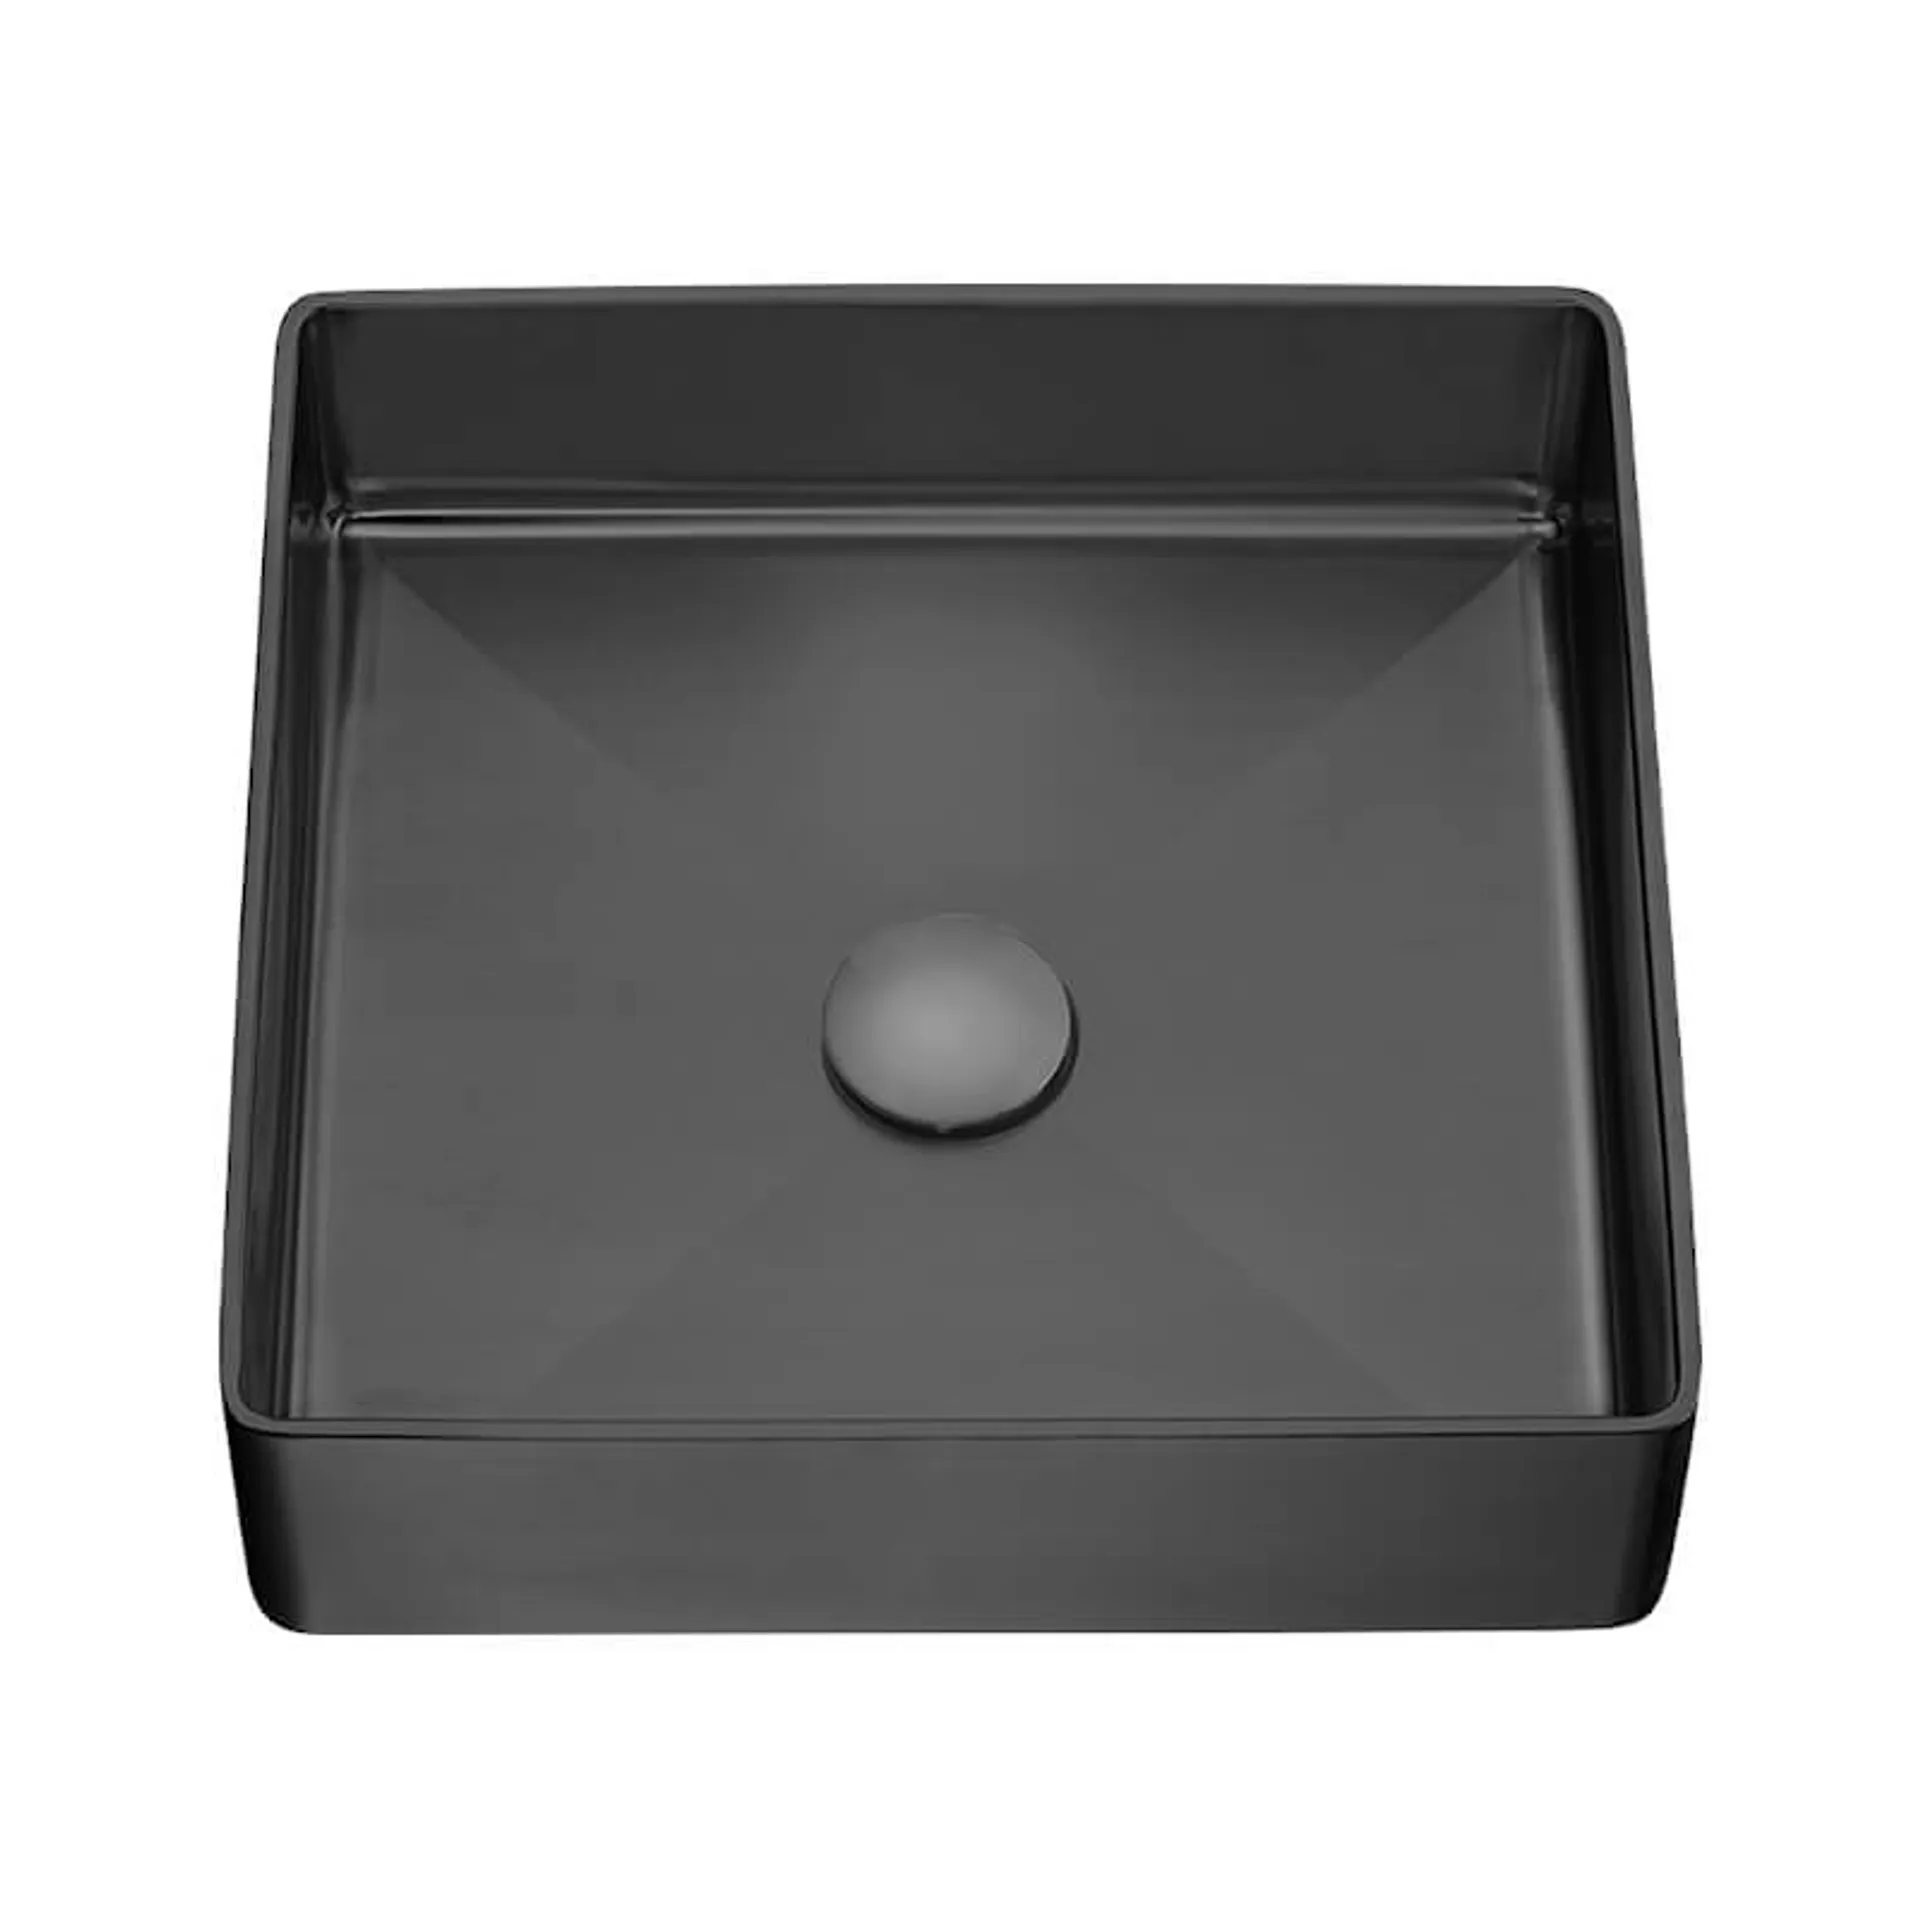 Umywalka nablatowa Laveo Pola 36 cm kwadratowa czarny mat VUP 722S